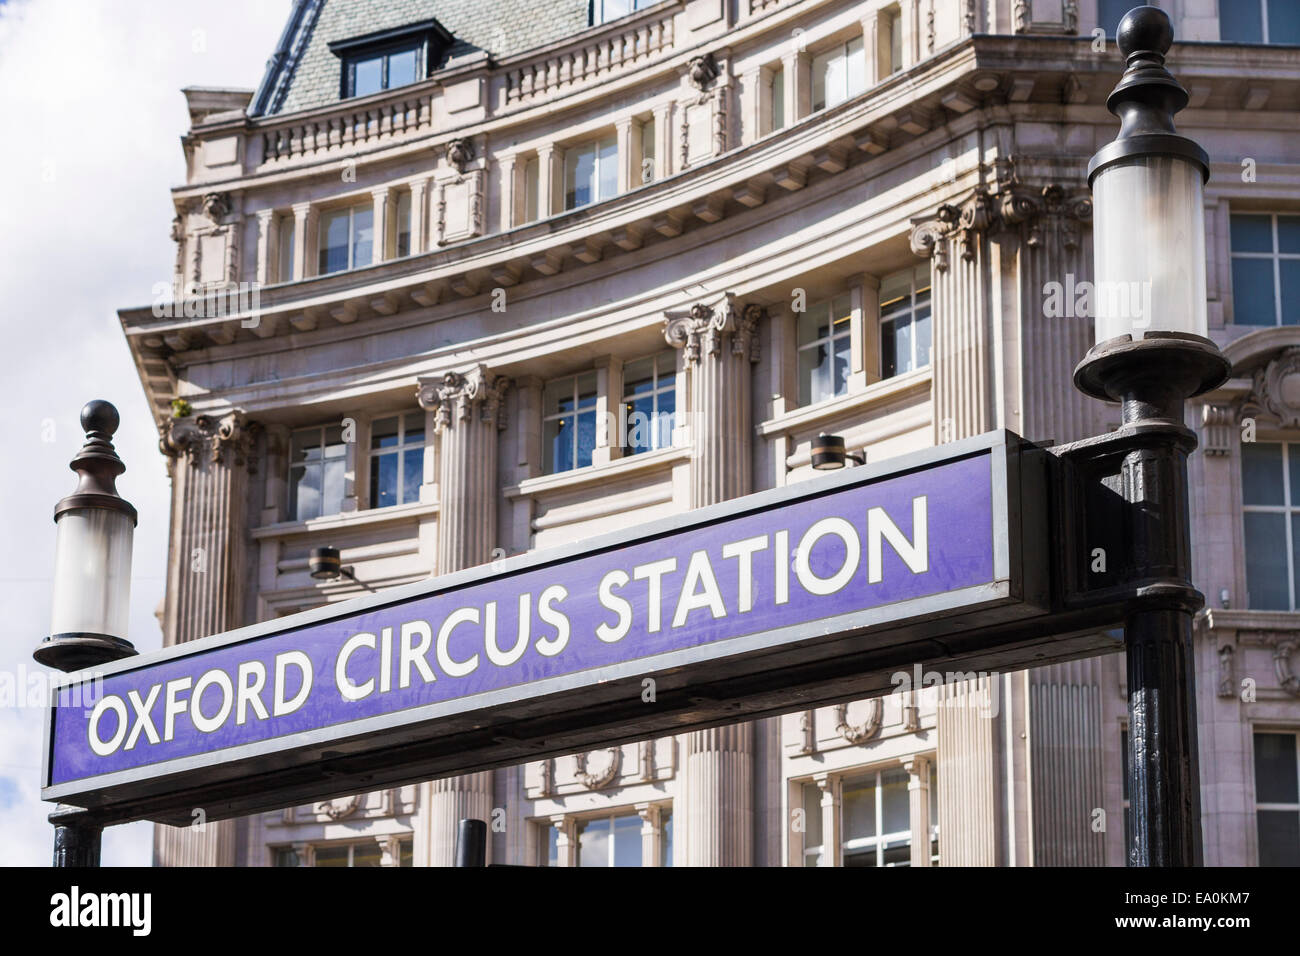 Oxford Circus station - London Stock Photo